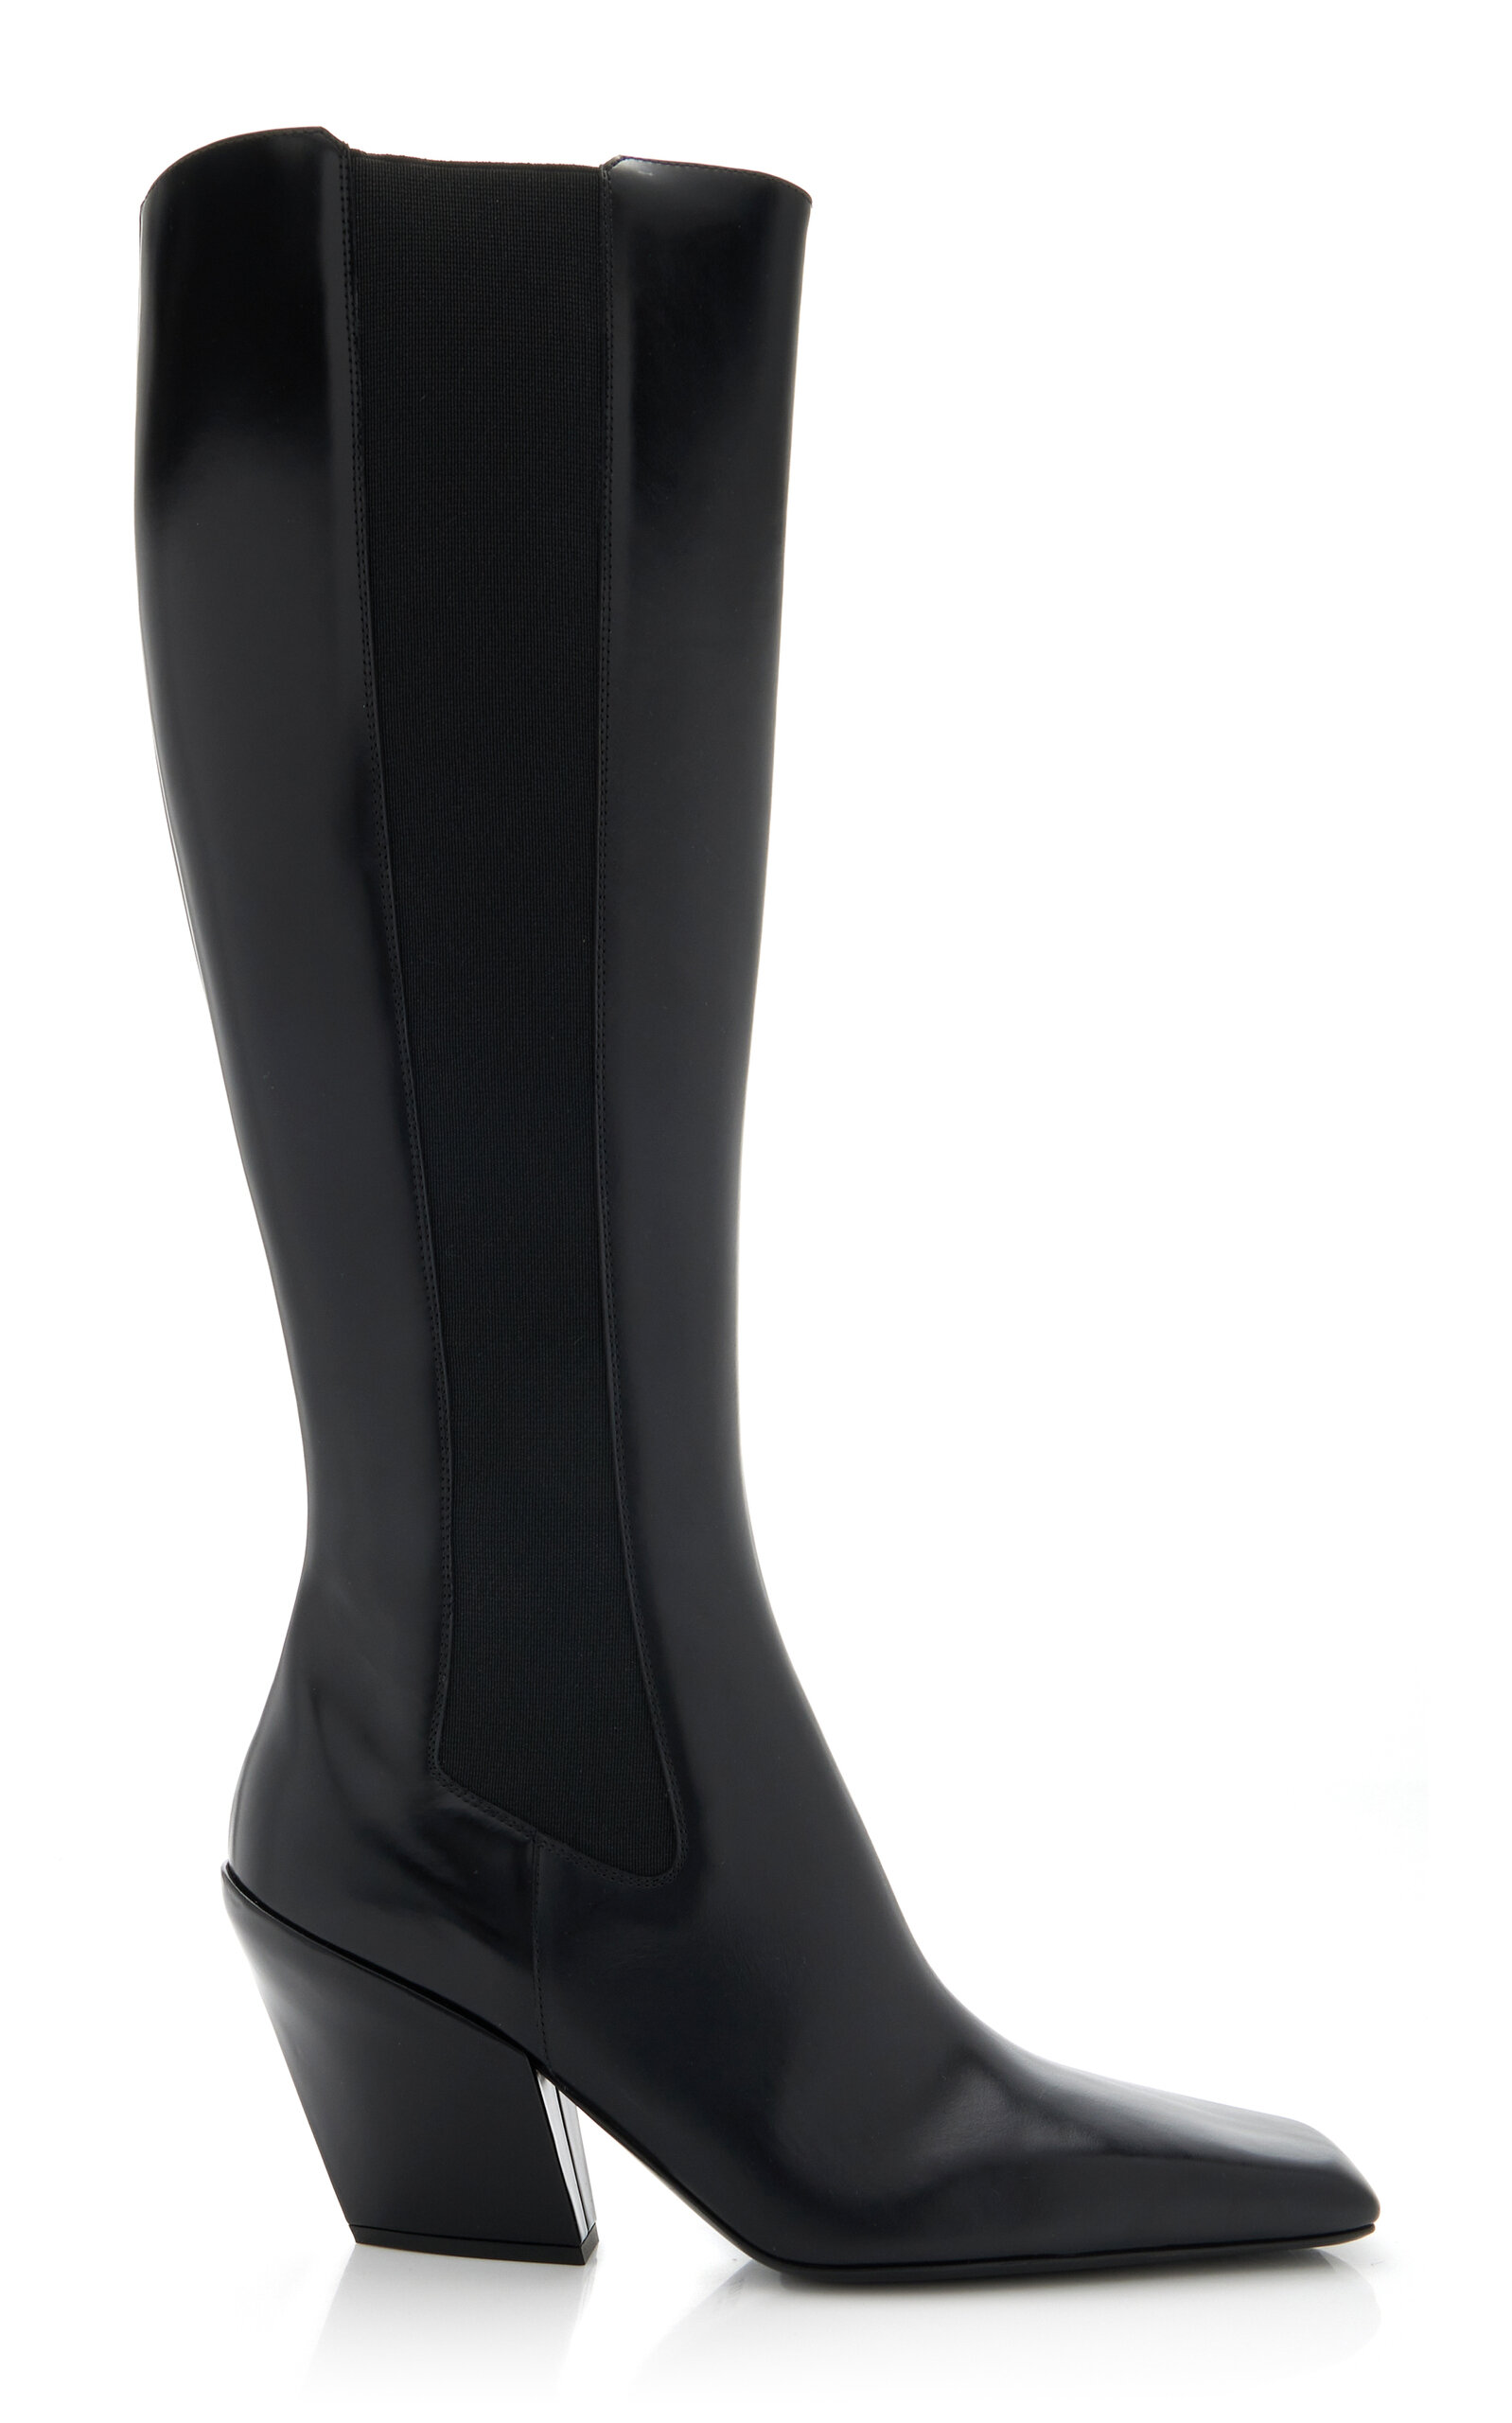 Prada - Women's Stivali Leather Knee Boots - Black - IT 36 - Moda Operandi